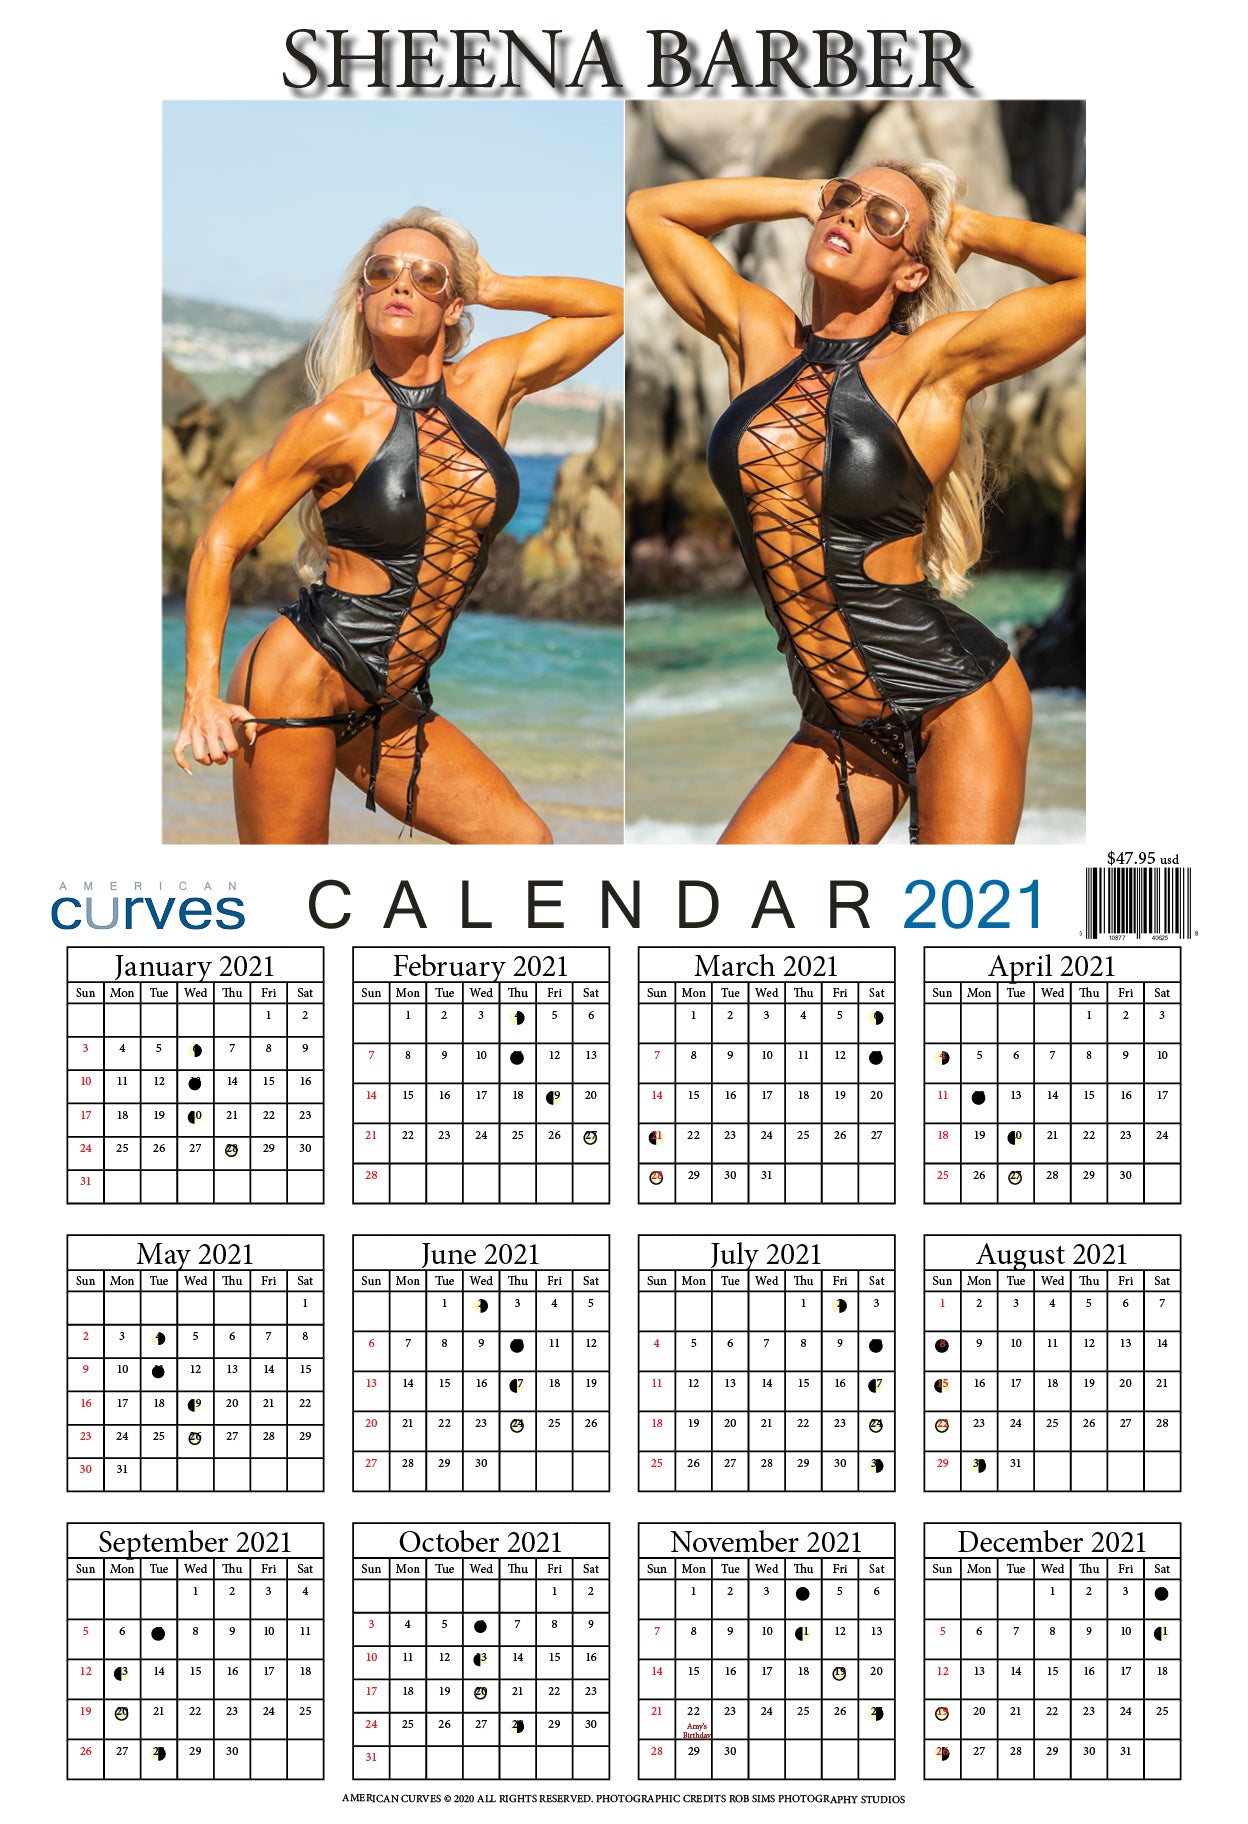 Sheena Barber-13x19 in-2021 High-Quality Wall Calendar